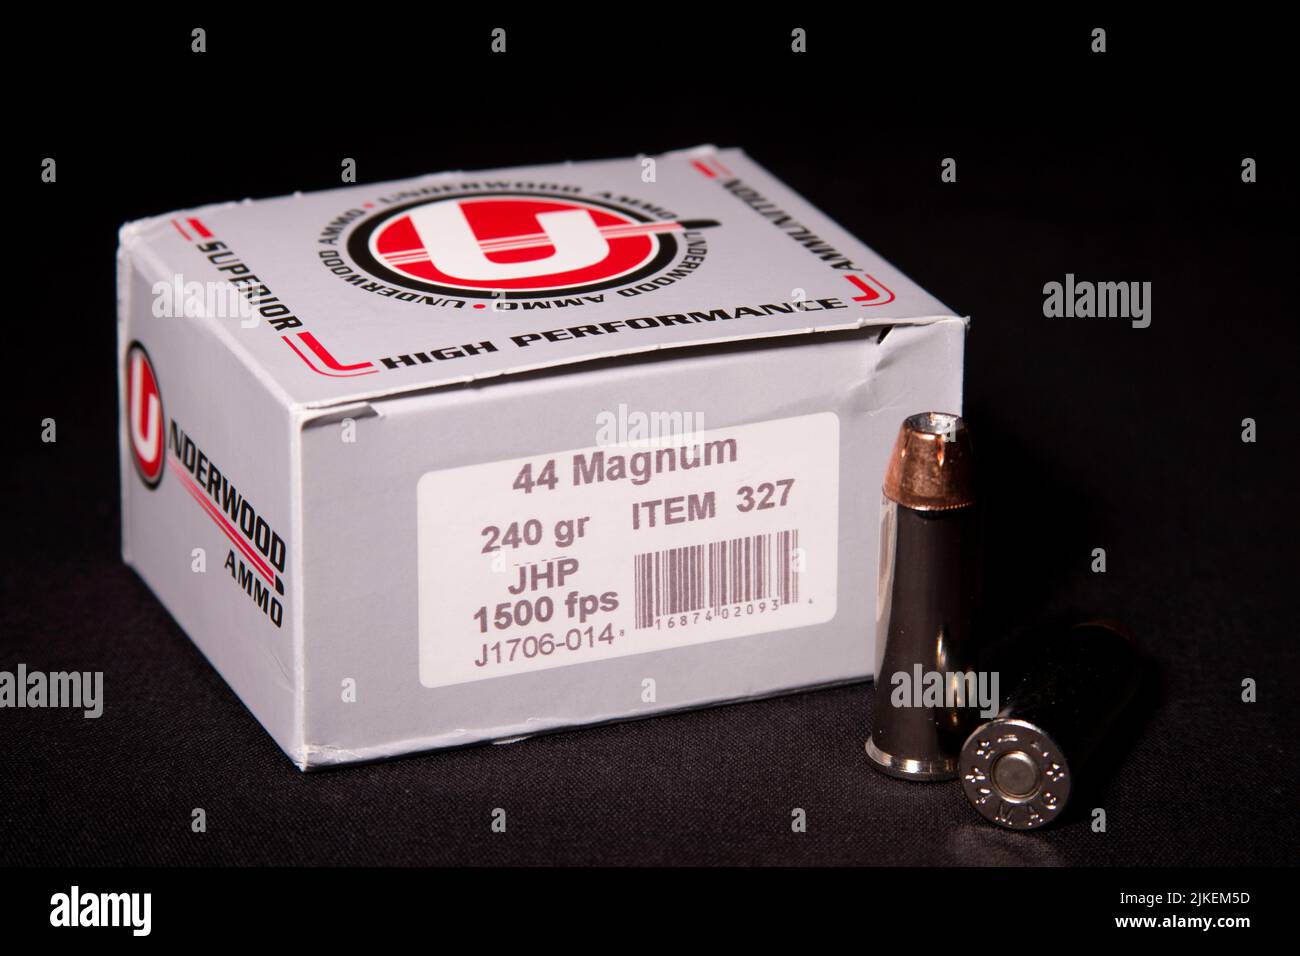 Underwood Ammo 44 Magnum 240gr JHP Banque D'Images